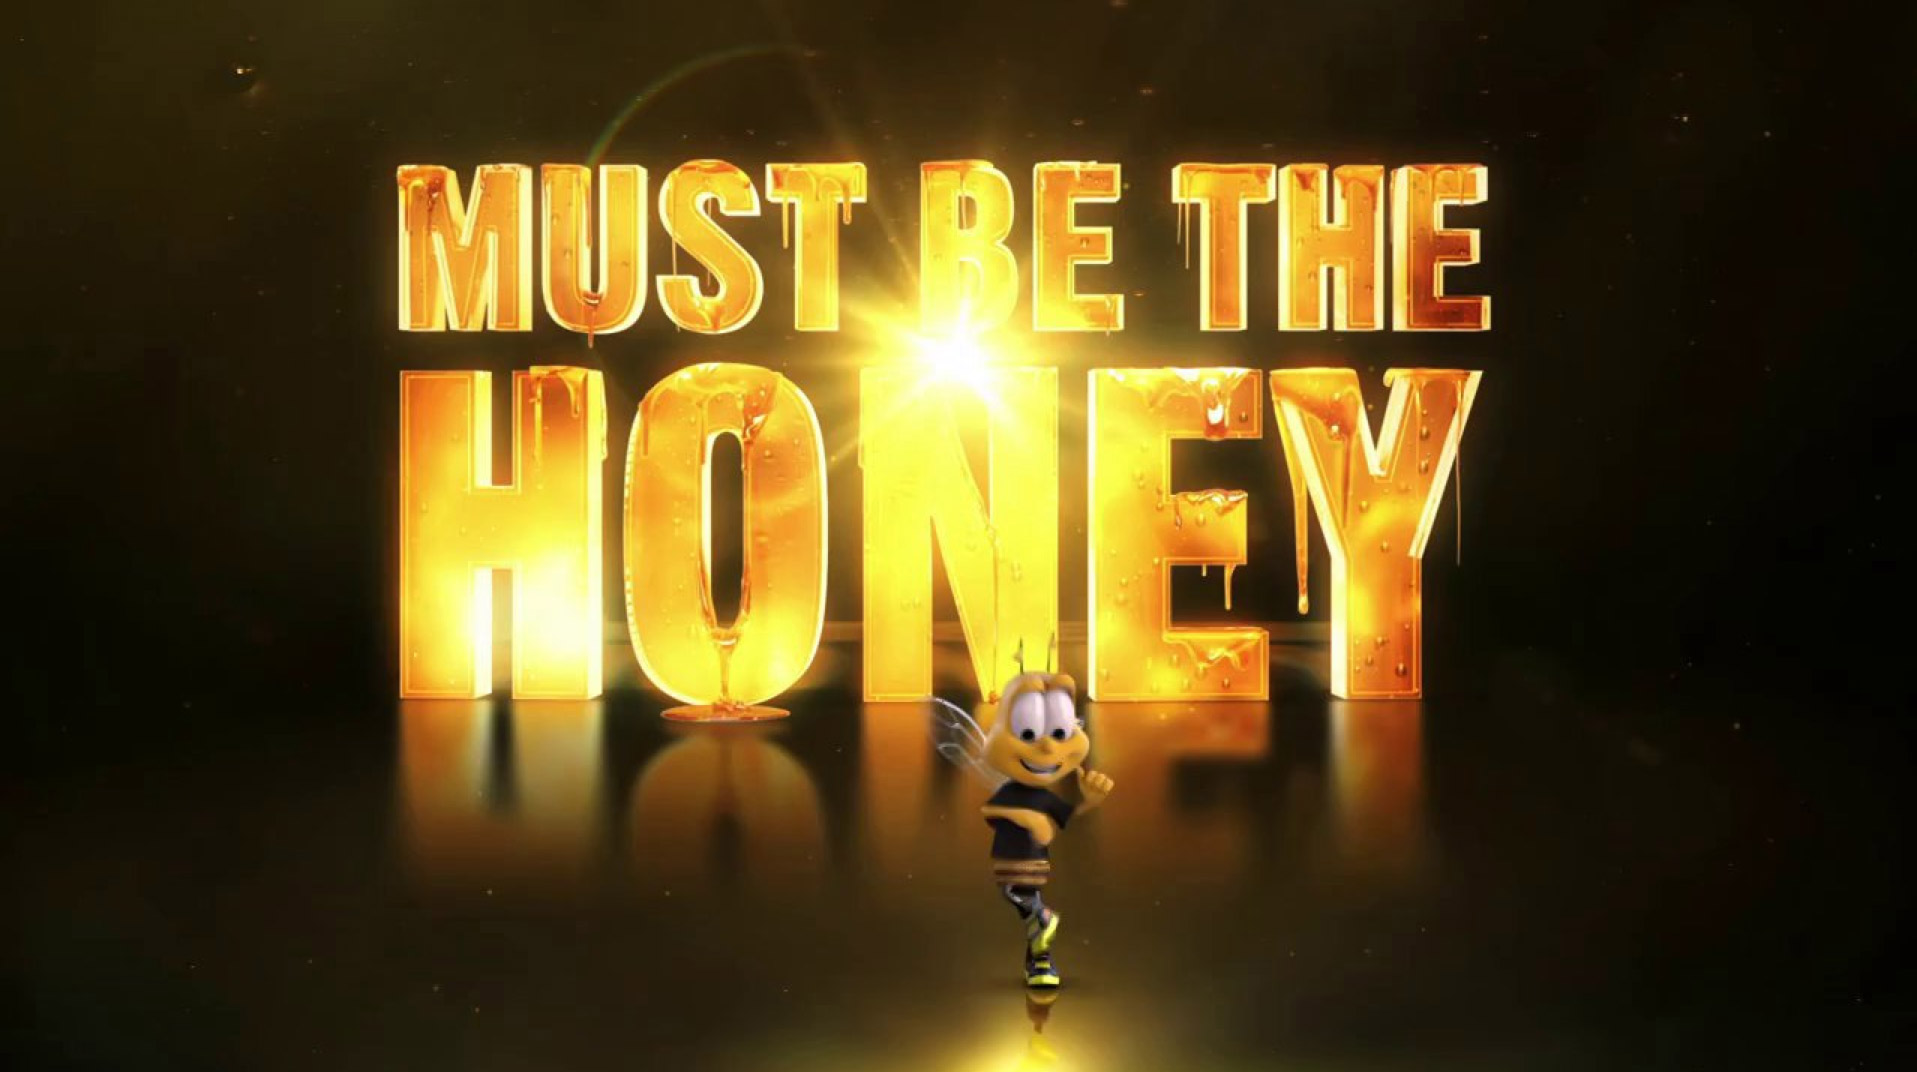 honey nut type